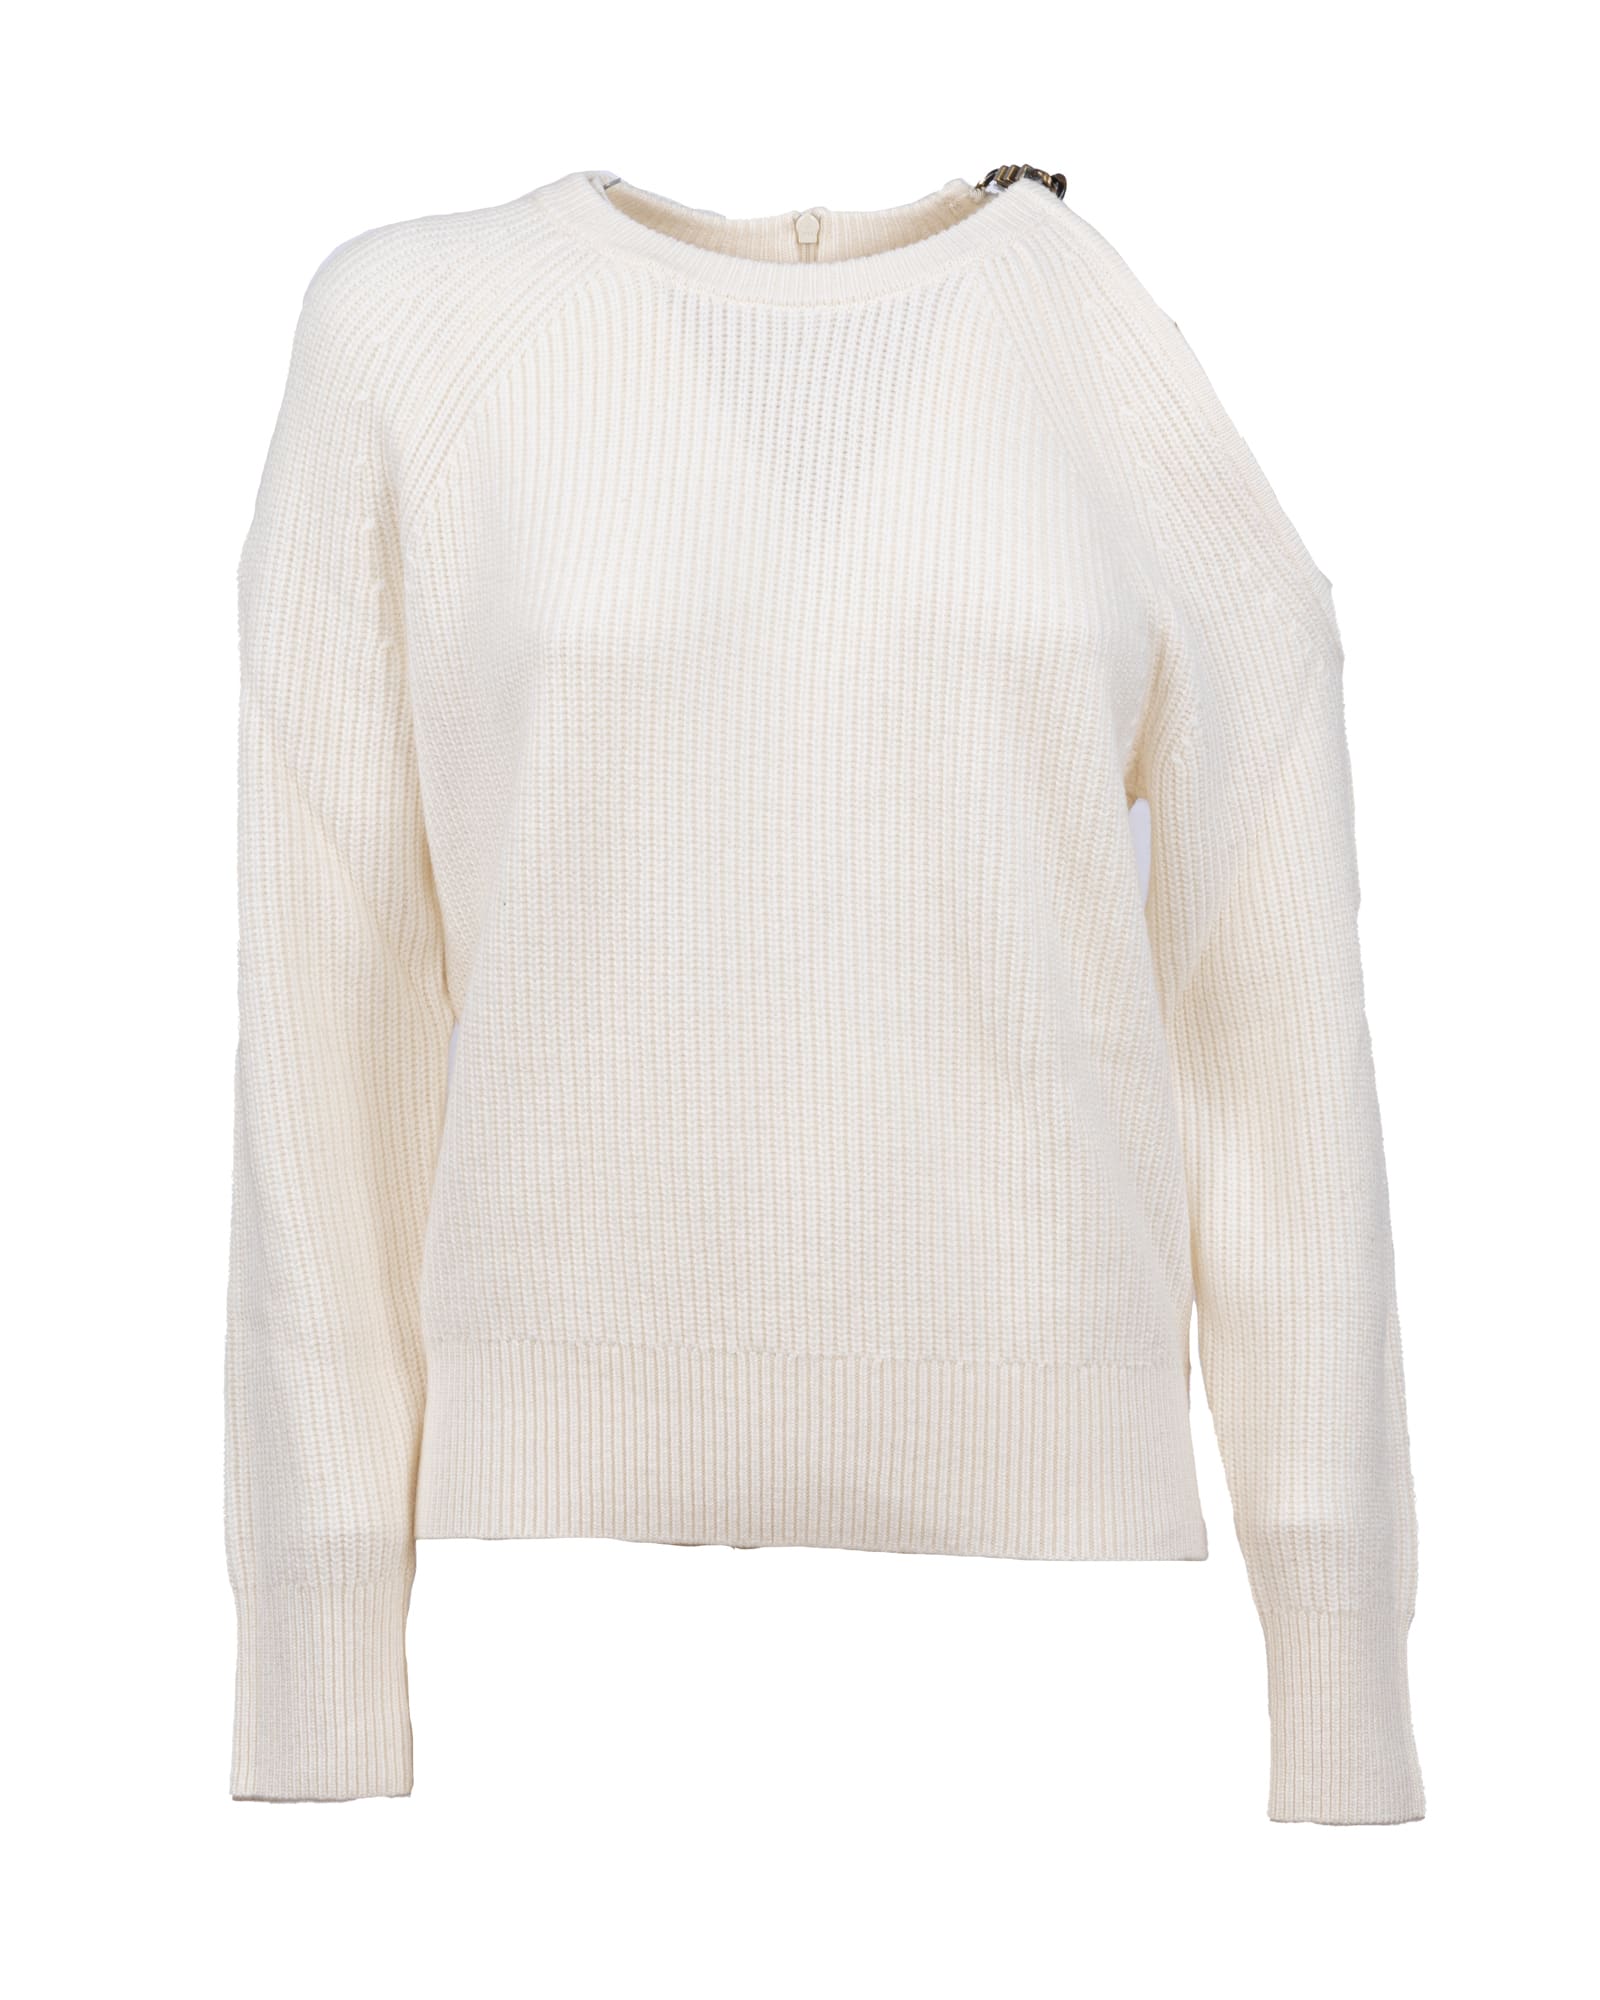 Michael Kors Wool sweater